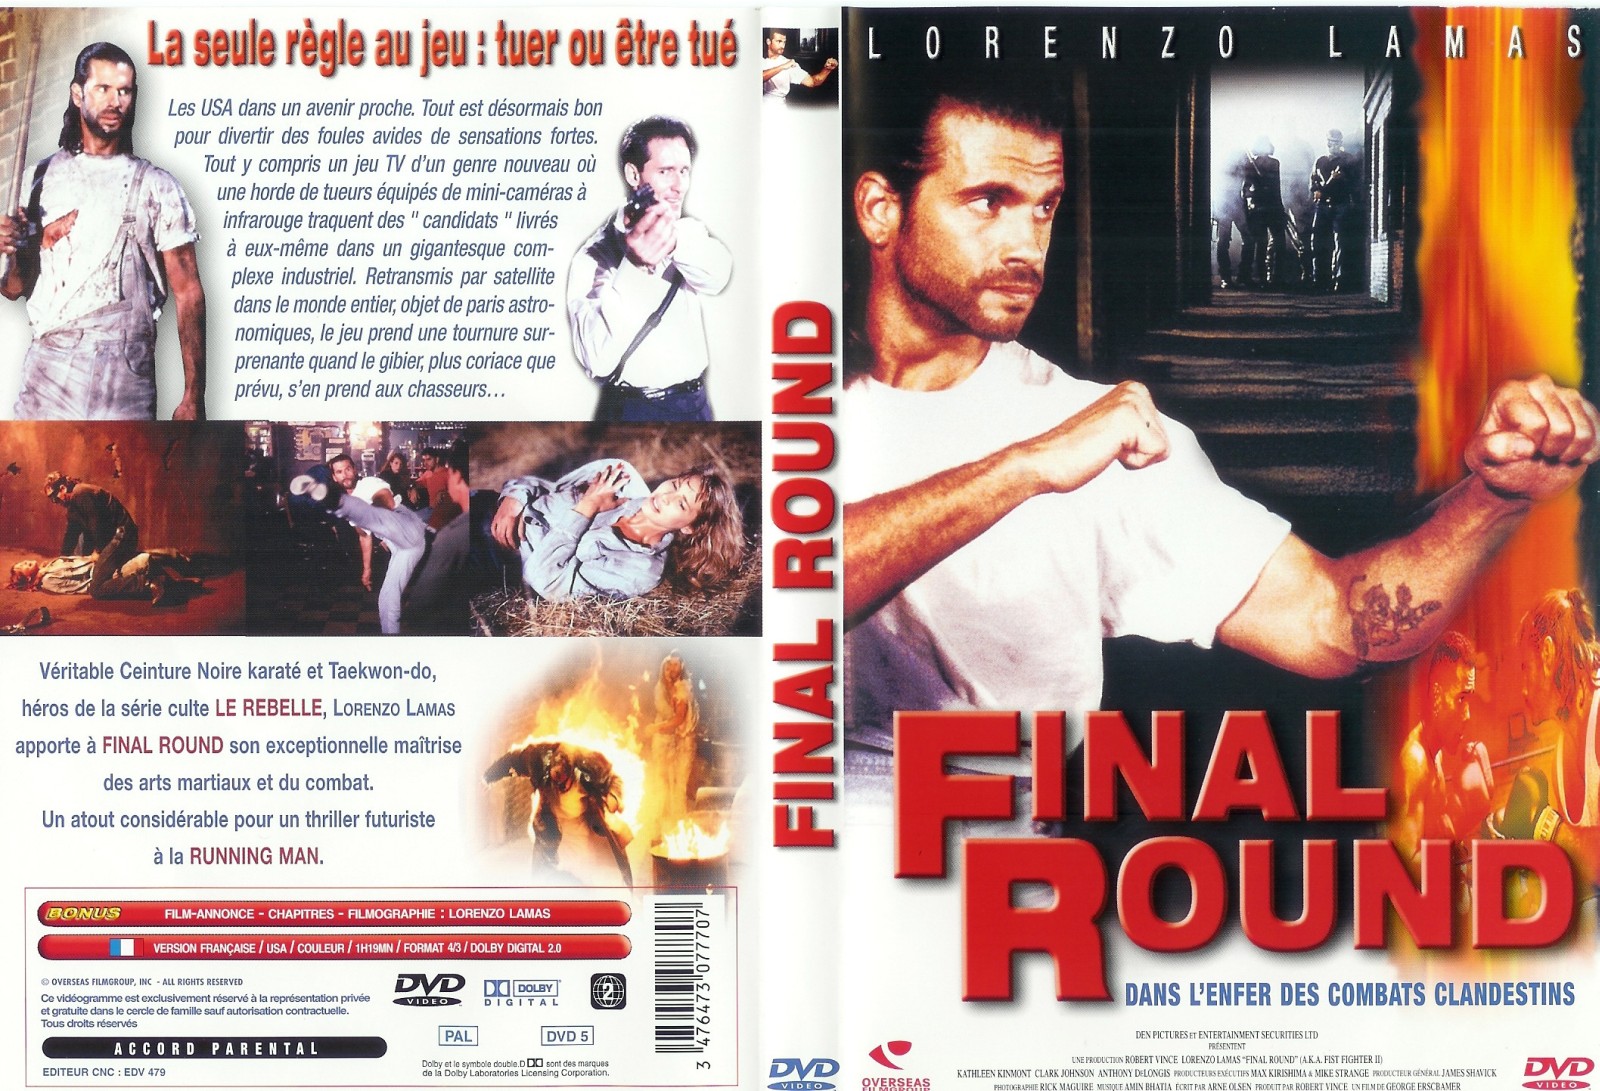 Jaquette DVD Final round